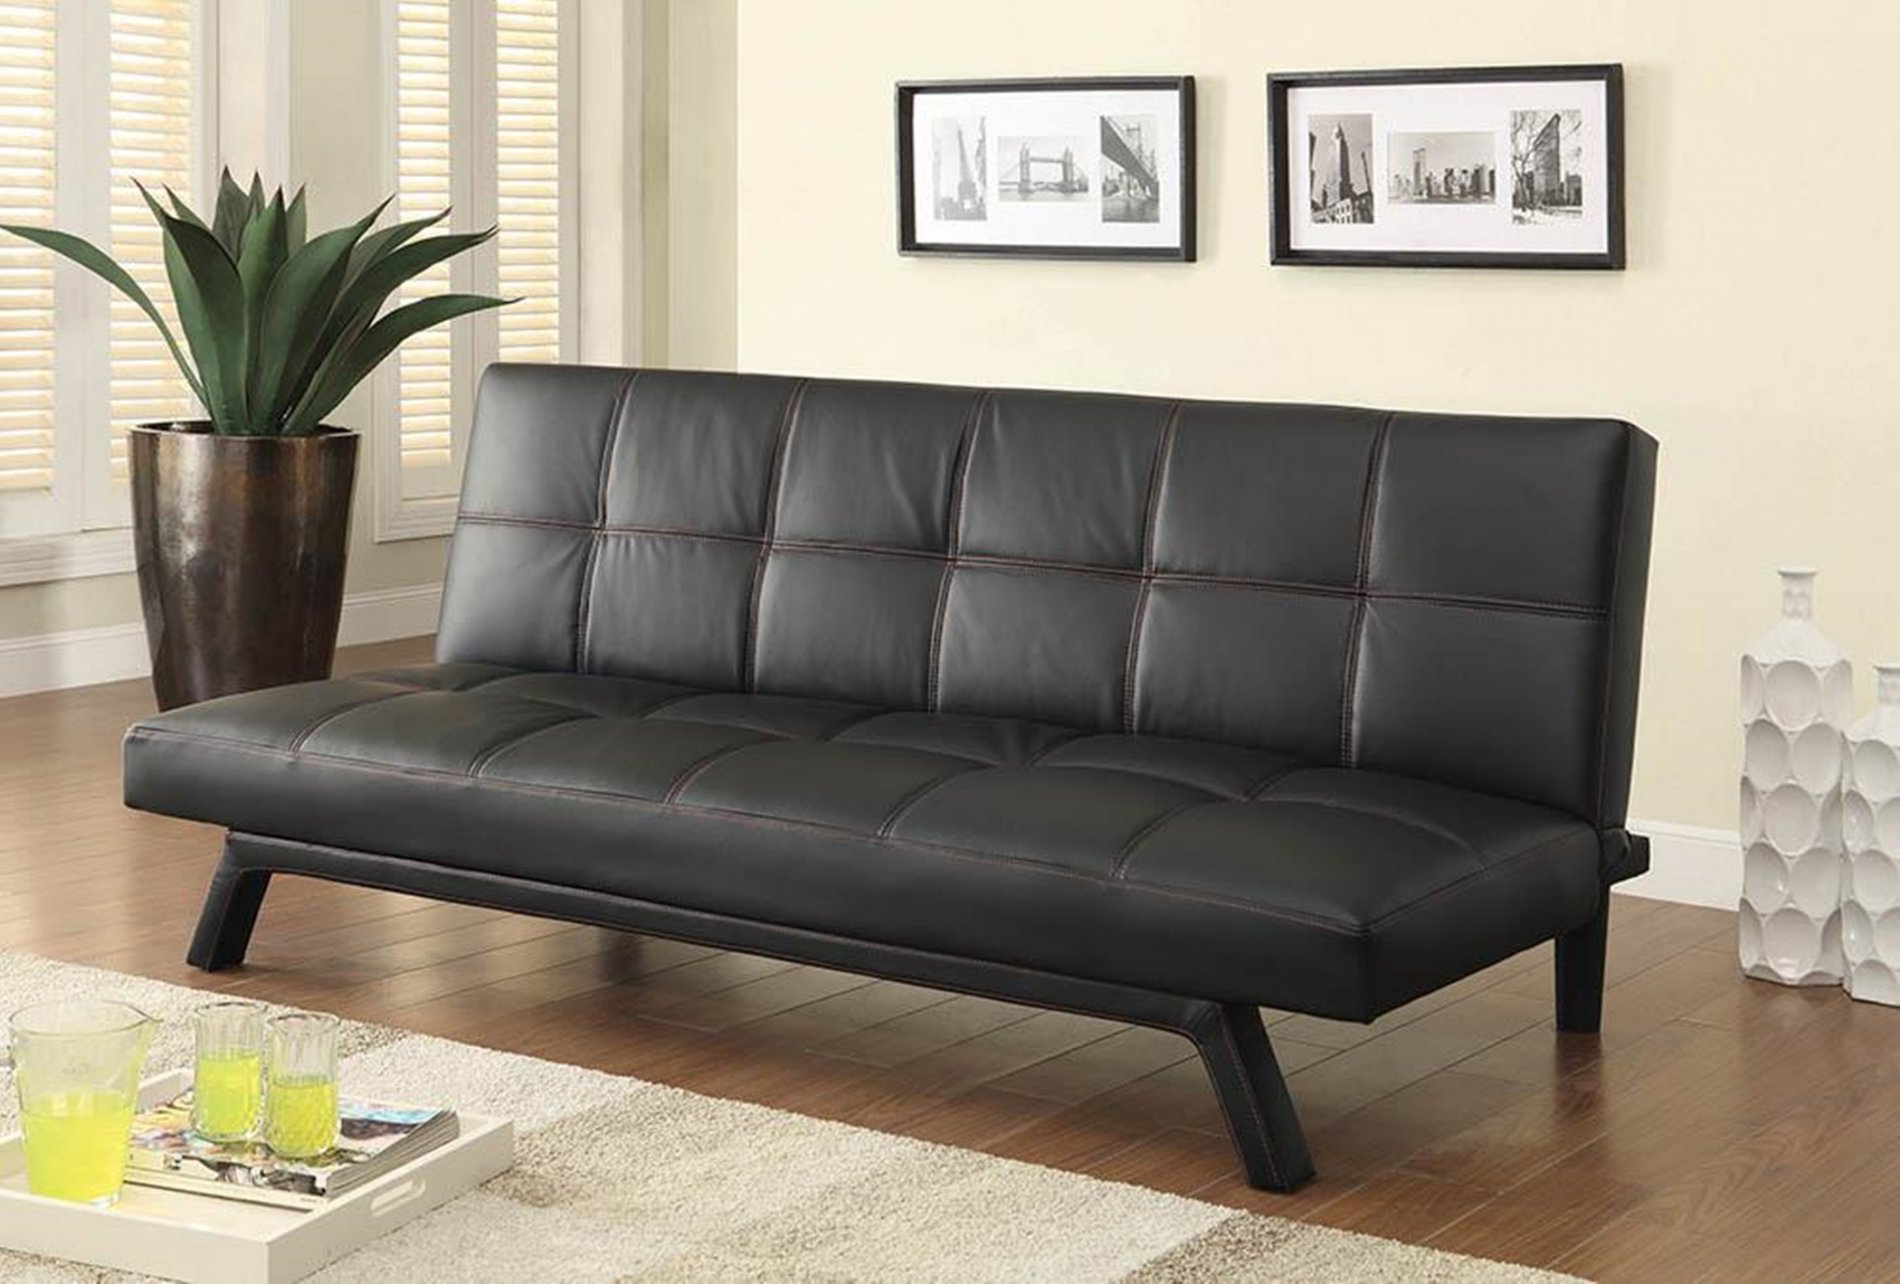 black sofa beds for sale